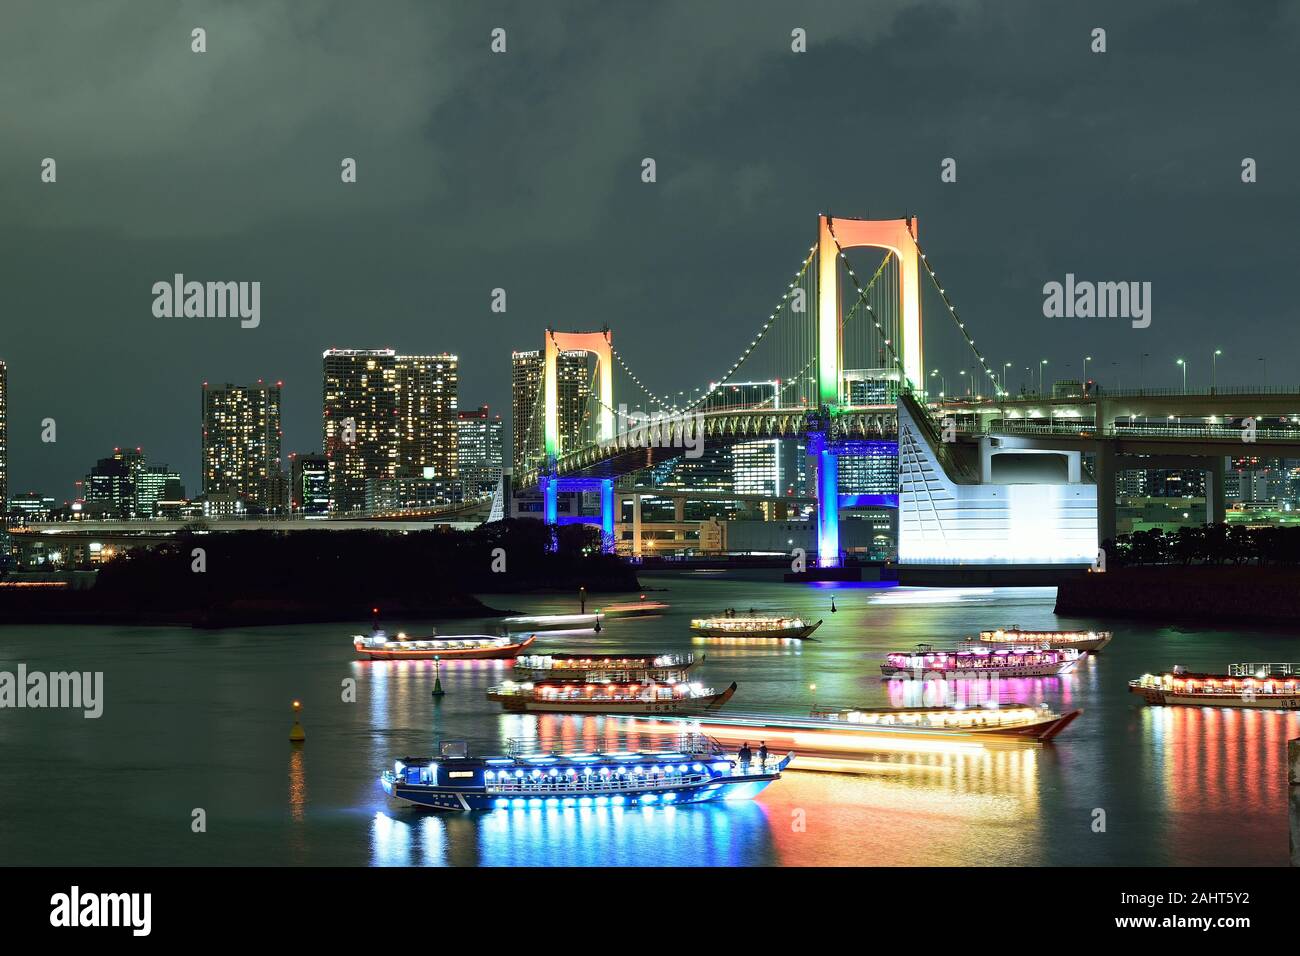 Urban Landscape Of Tokyo Rainbow Bridge With Illuminated Tourist Boats A Major Attraction In Tokyo Bay Area Stock Photo Alamy